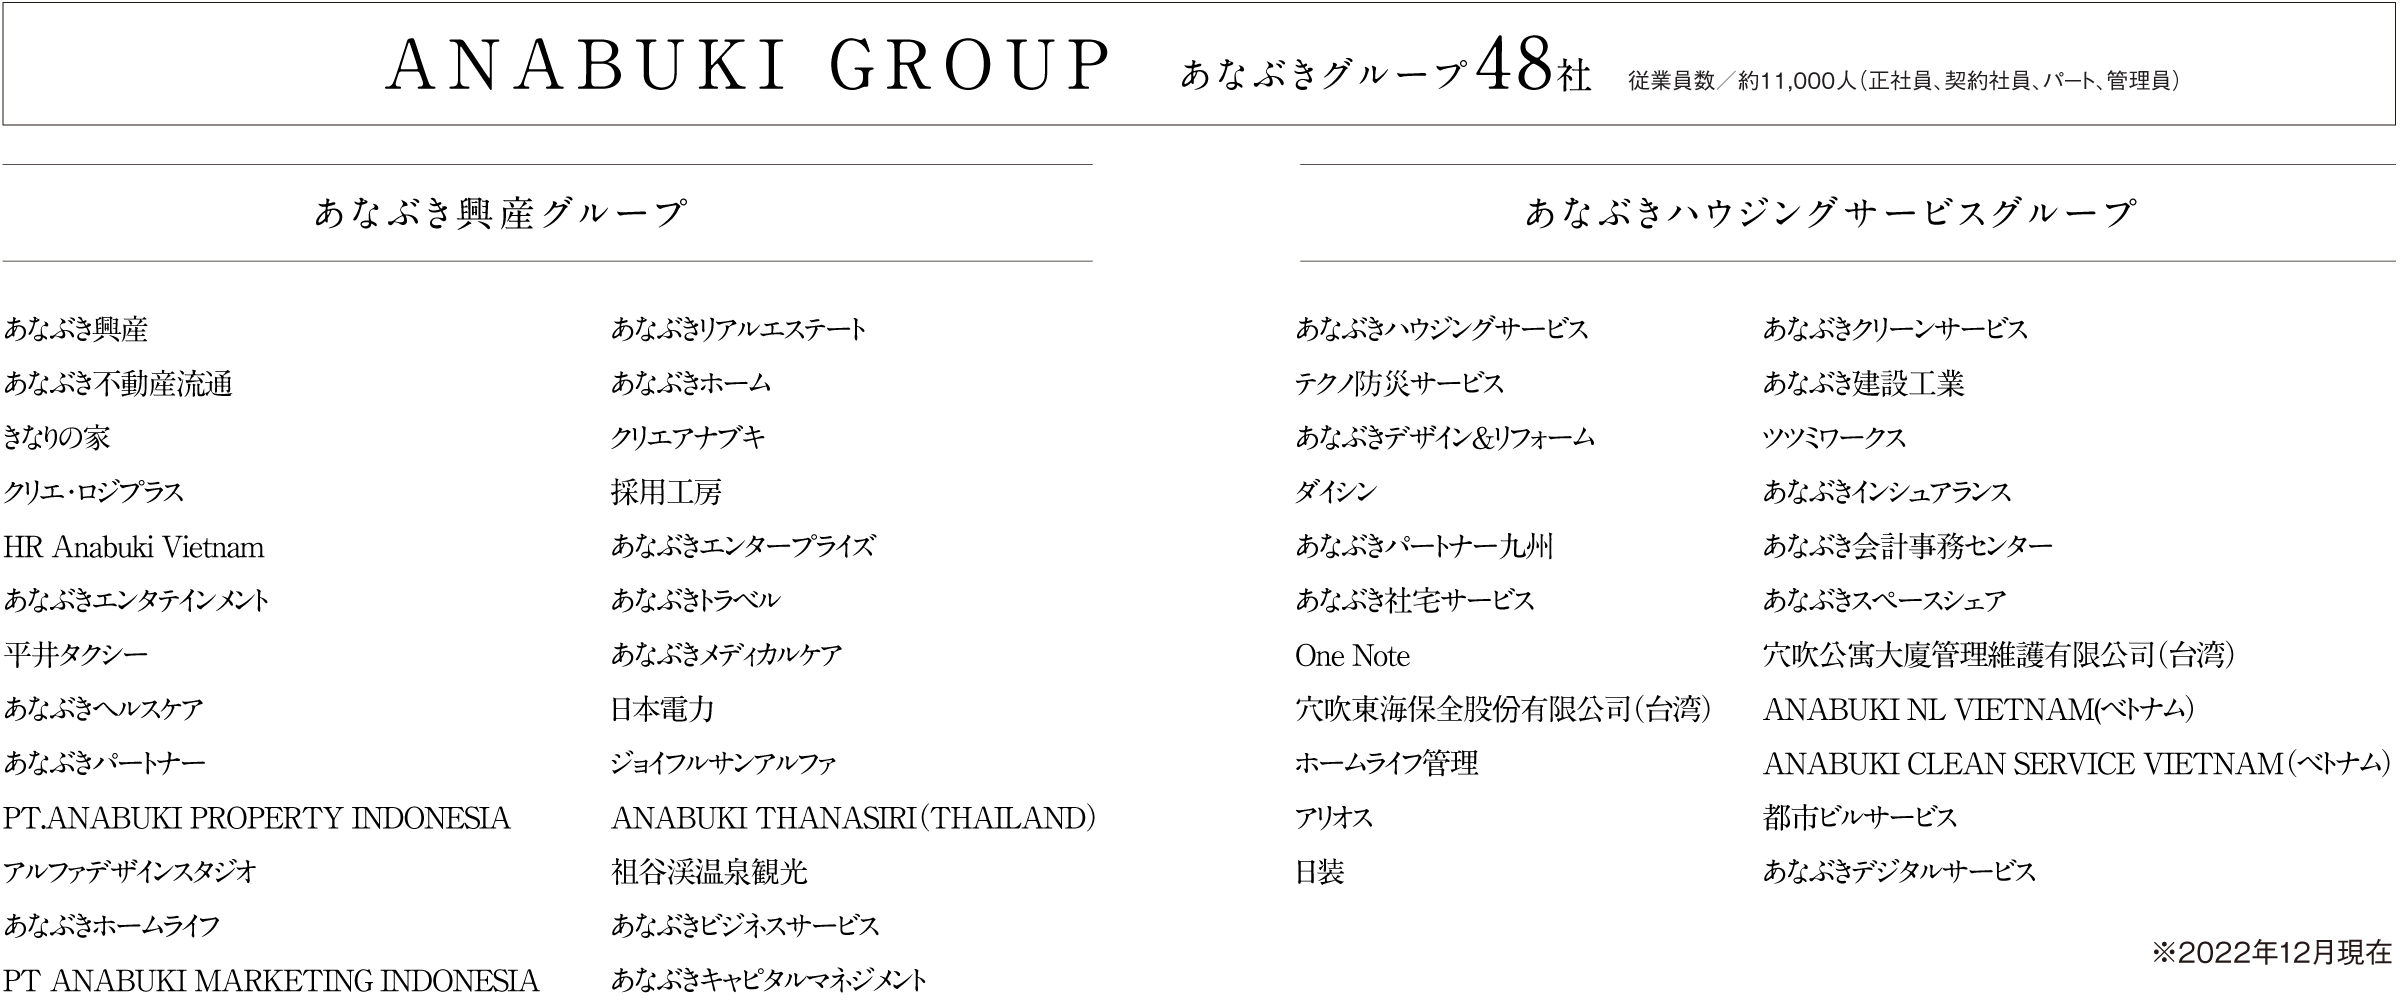 ANABUKI GROUP